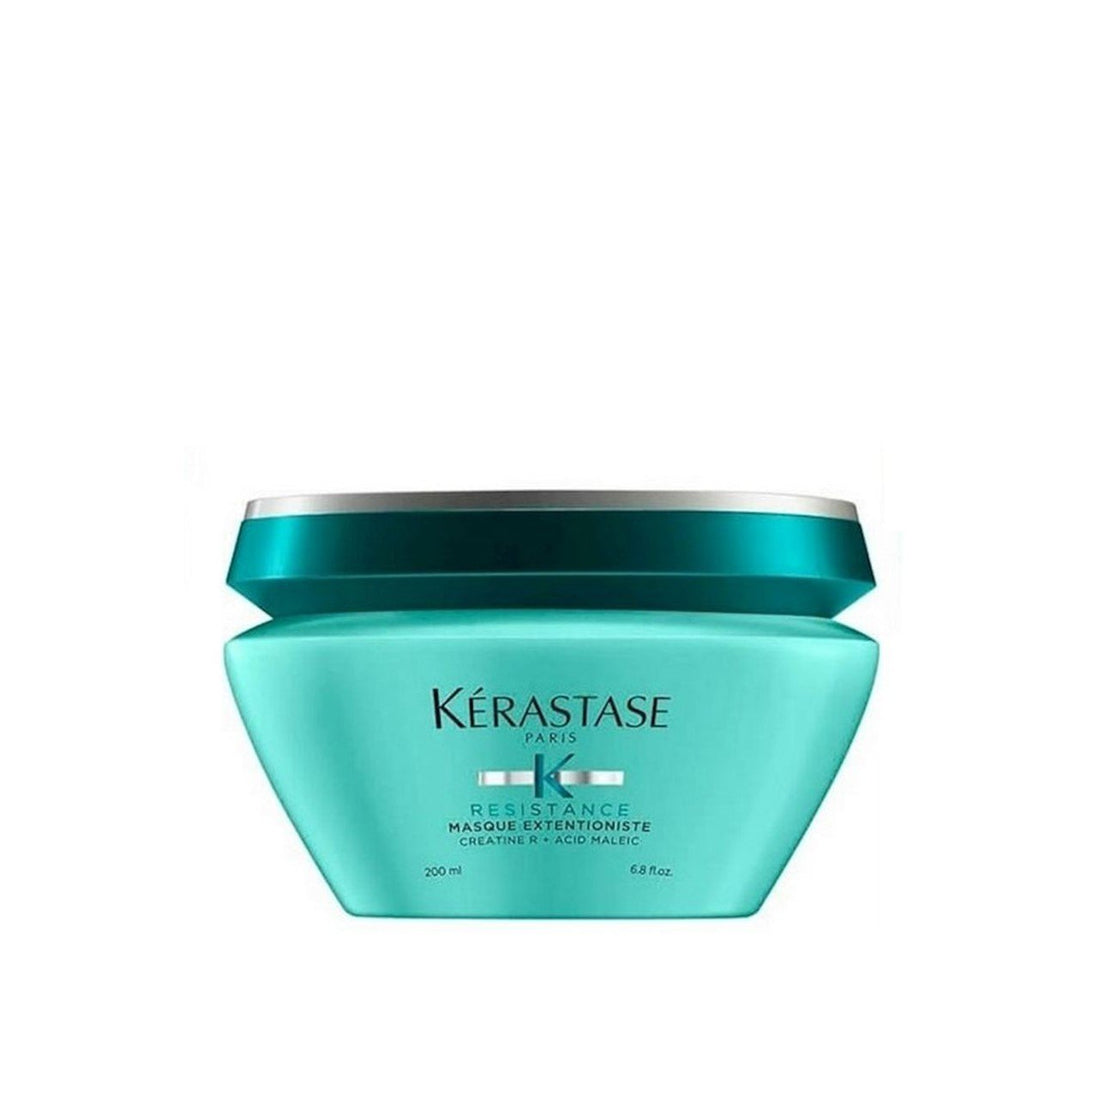 Kérastase Resistance Masque Extensioniste Hair Mask 200ml (6.76fl oz)